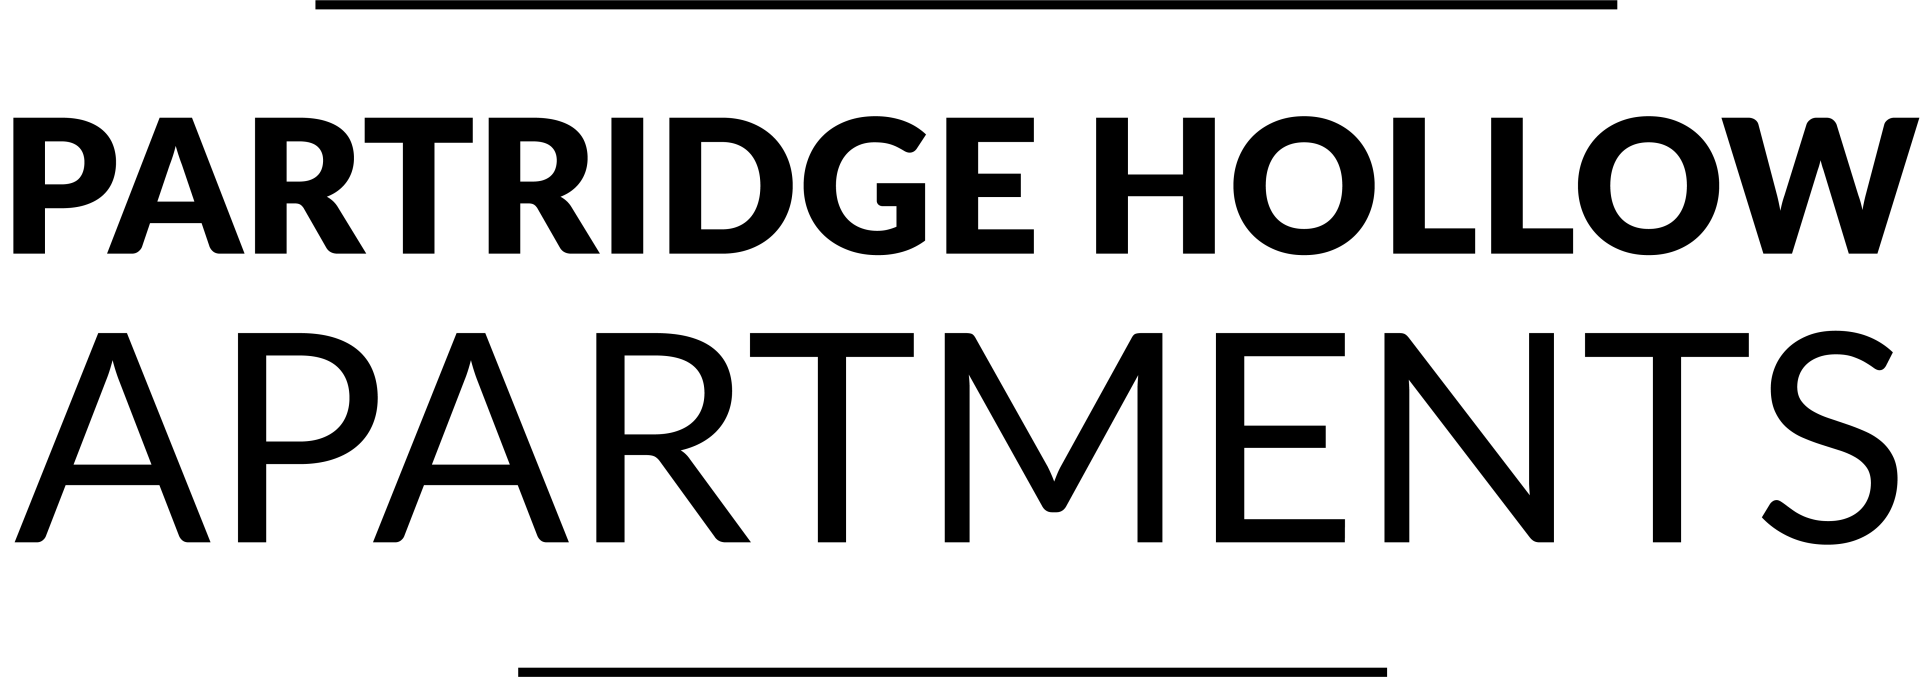 Partridge Hollow Apartments Logo